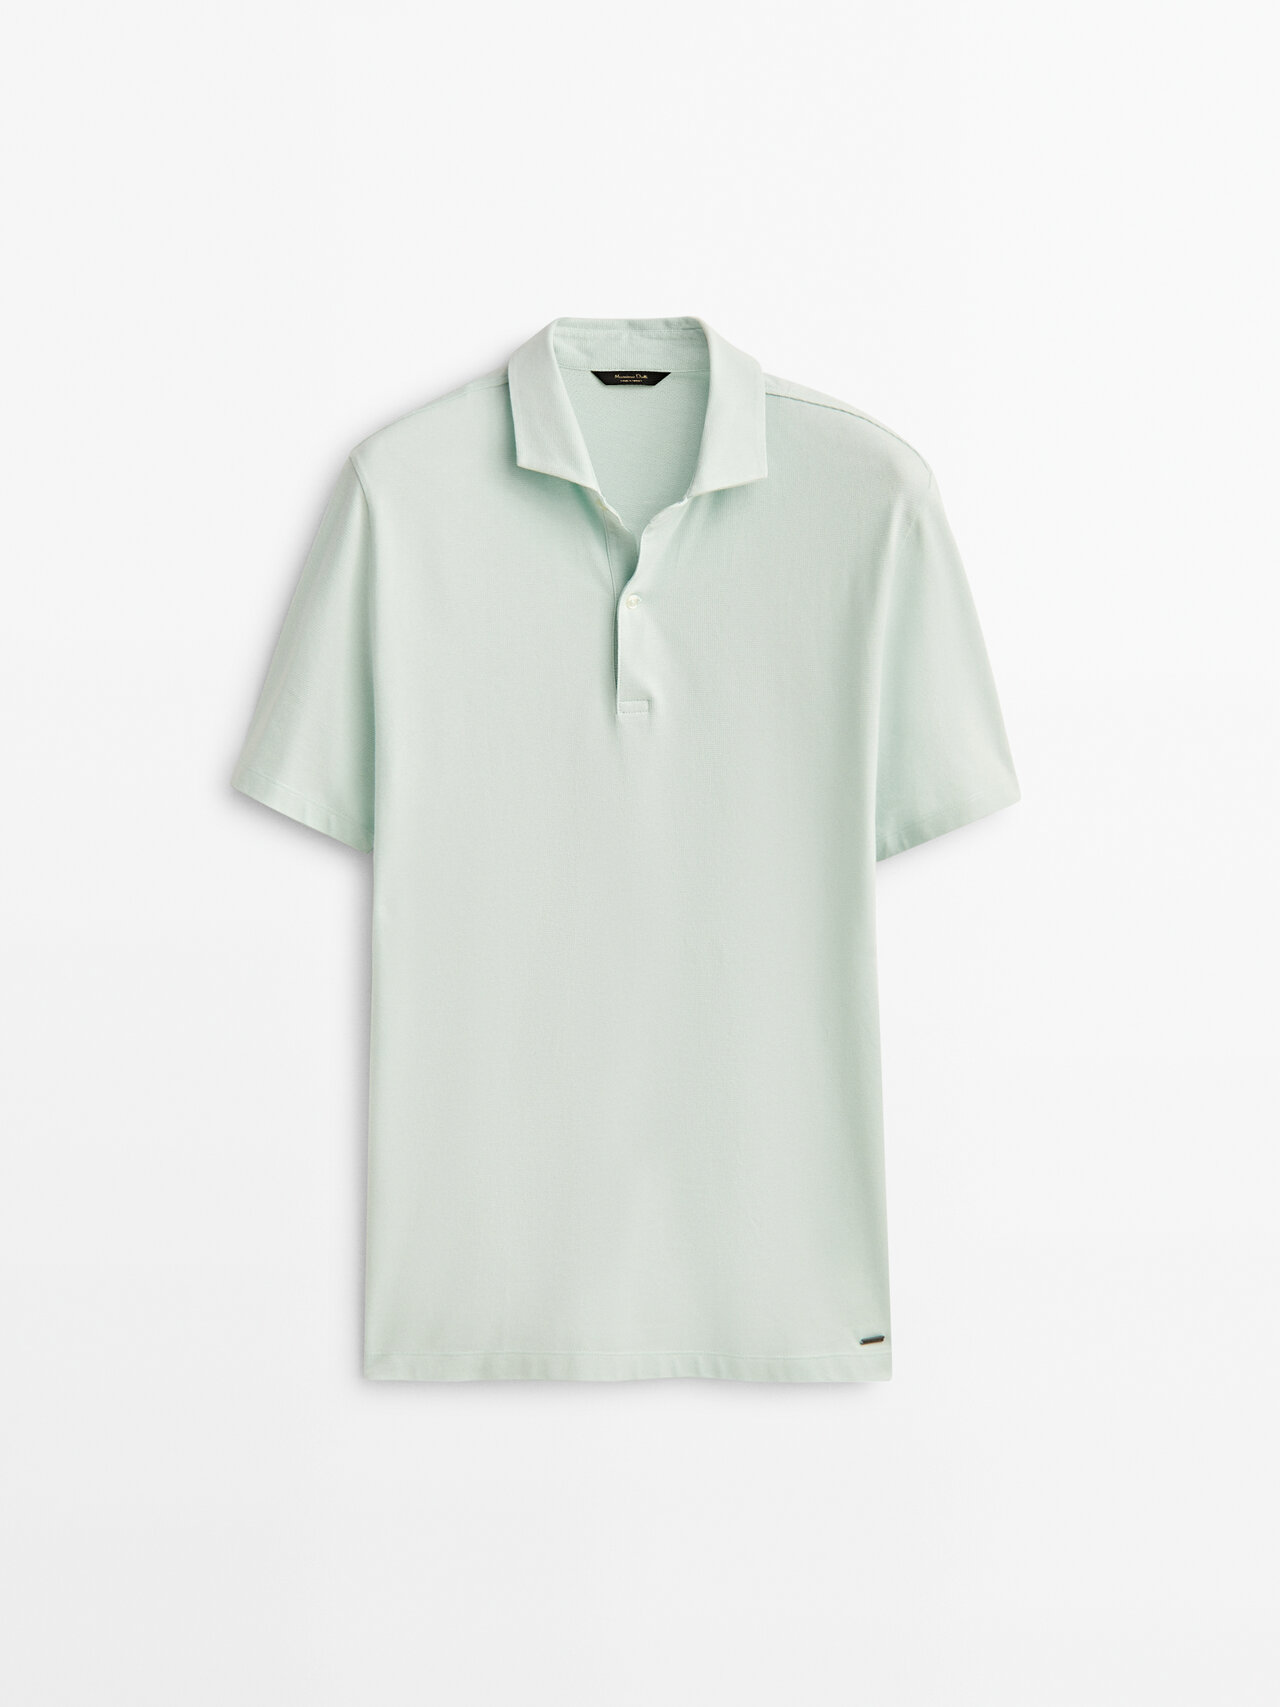 ruimte Elementair temperatuur Massimo Dutti Cotton Check Texture Knit Polo Shirt In Mint | ModeSens